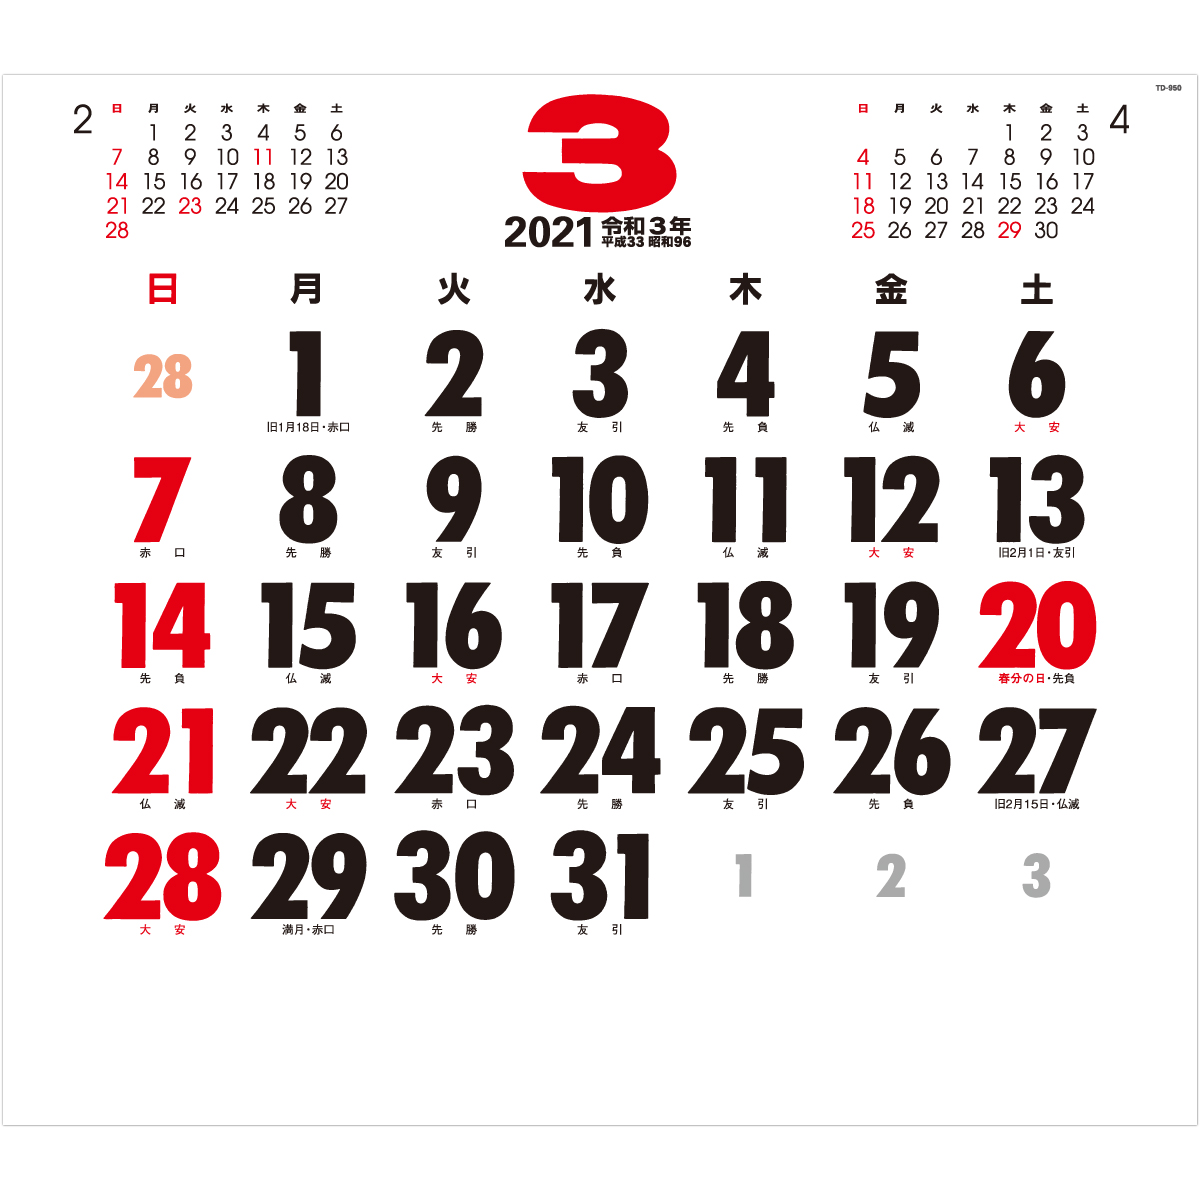 Td950 Bz ビズ カレンダー 21年カレンダー 文字月表 イラスト無し 名入れカレンダー製作所 累計35 000社突破